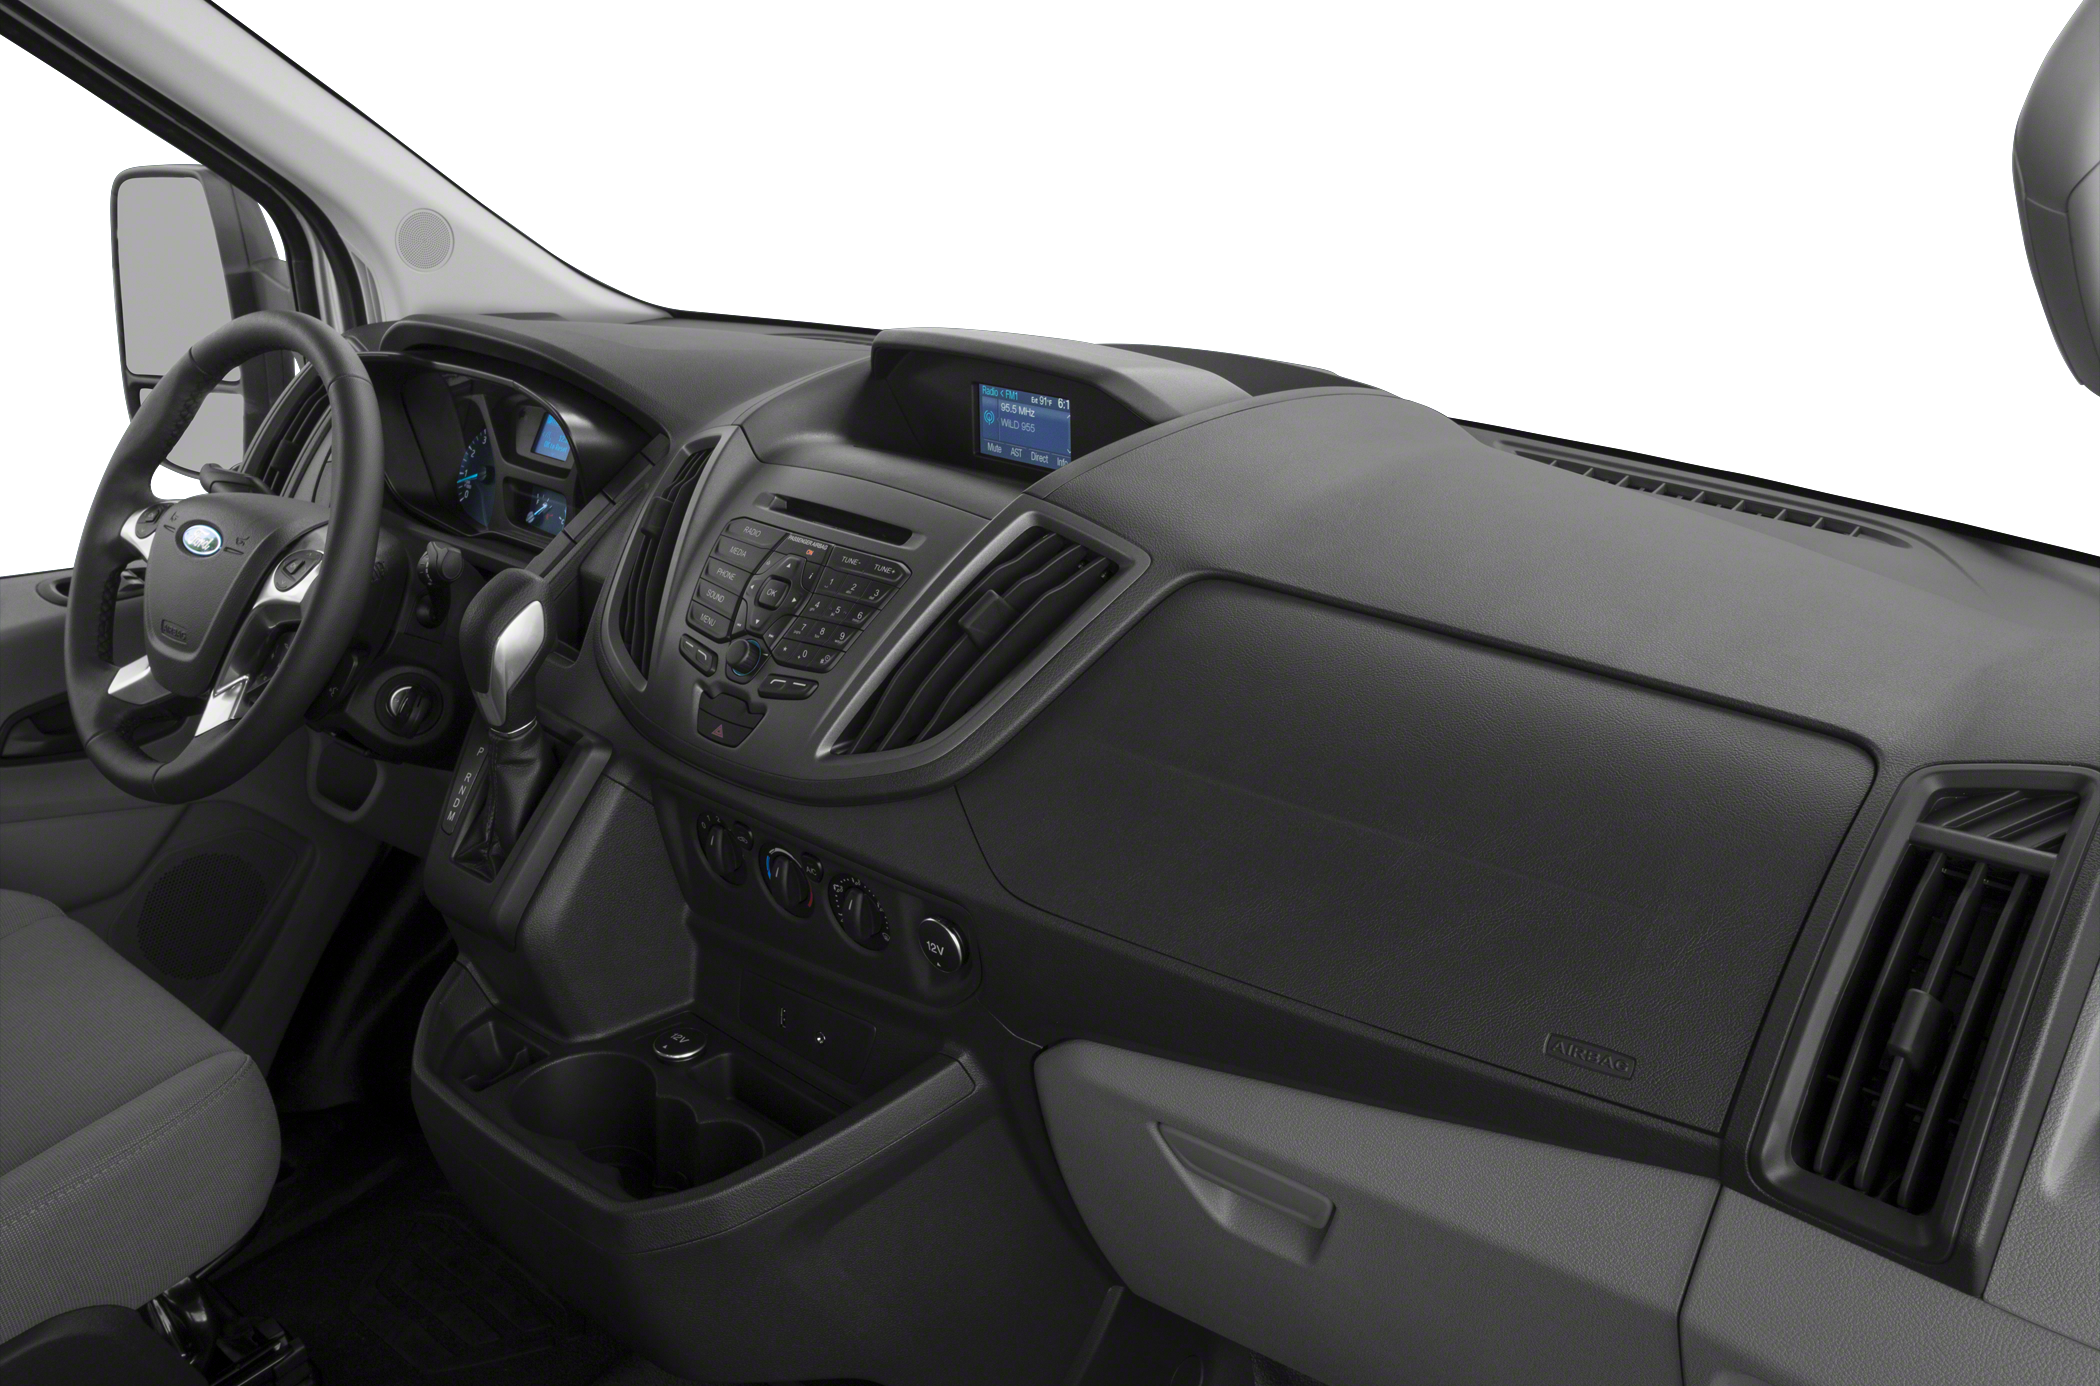 2015 Ford Transit-150